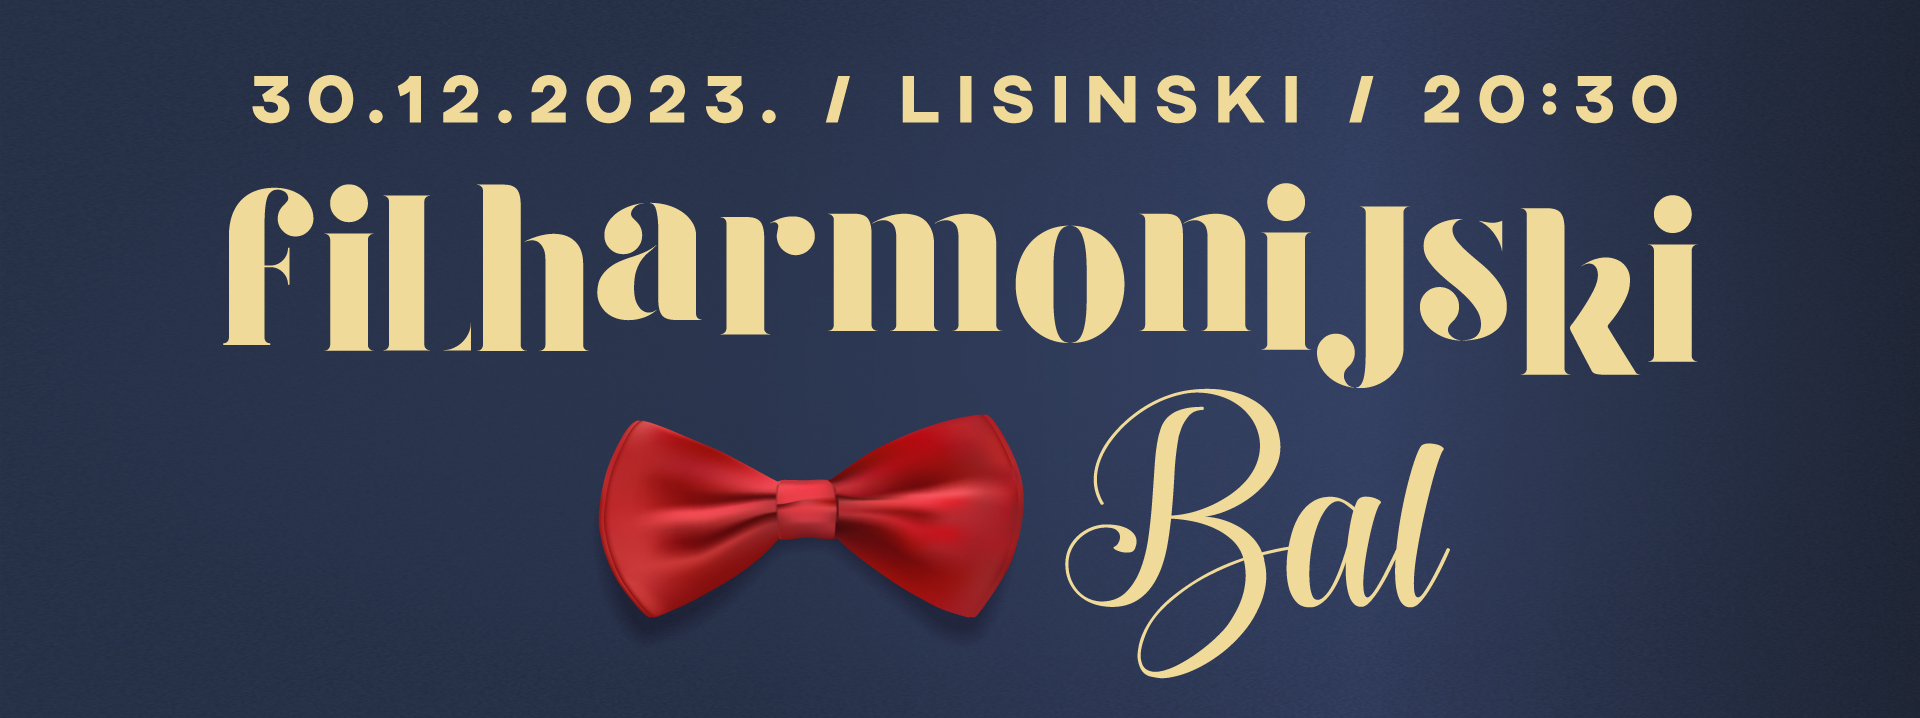 Filharmonijski bal 2023.